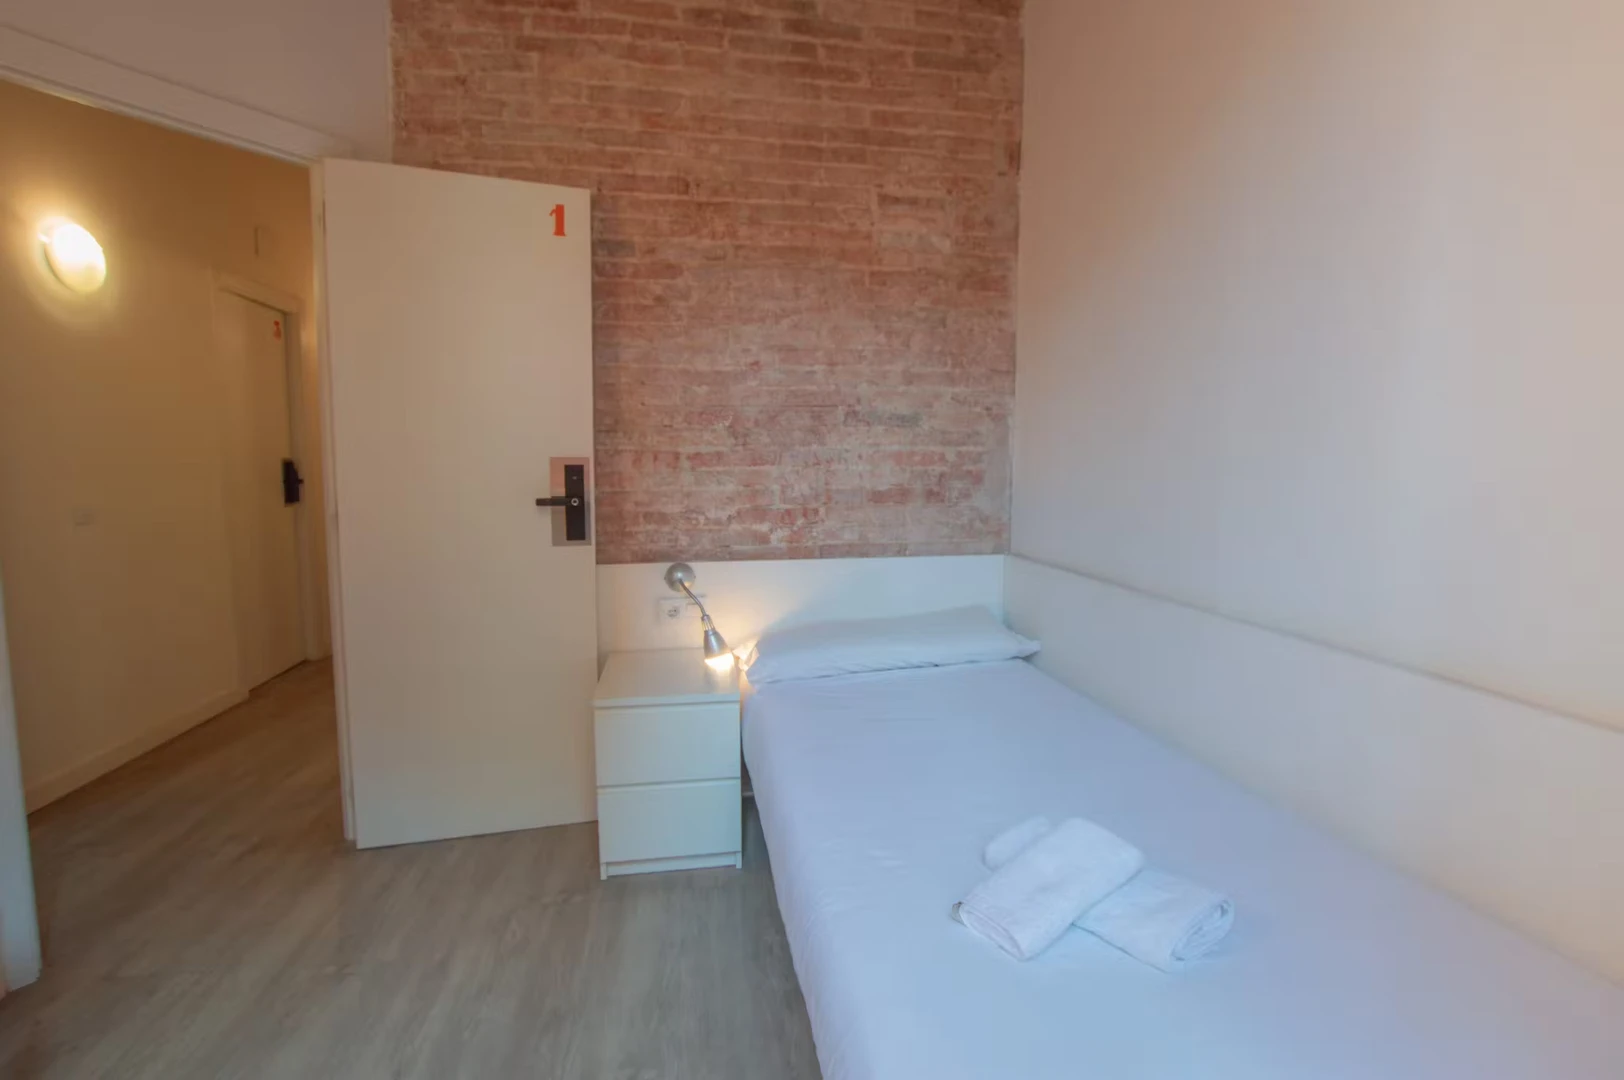 Cheap private room in barcelona